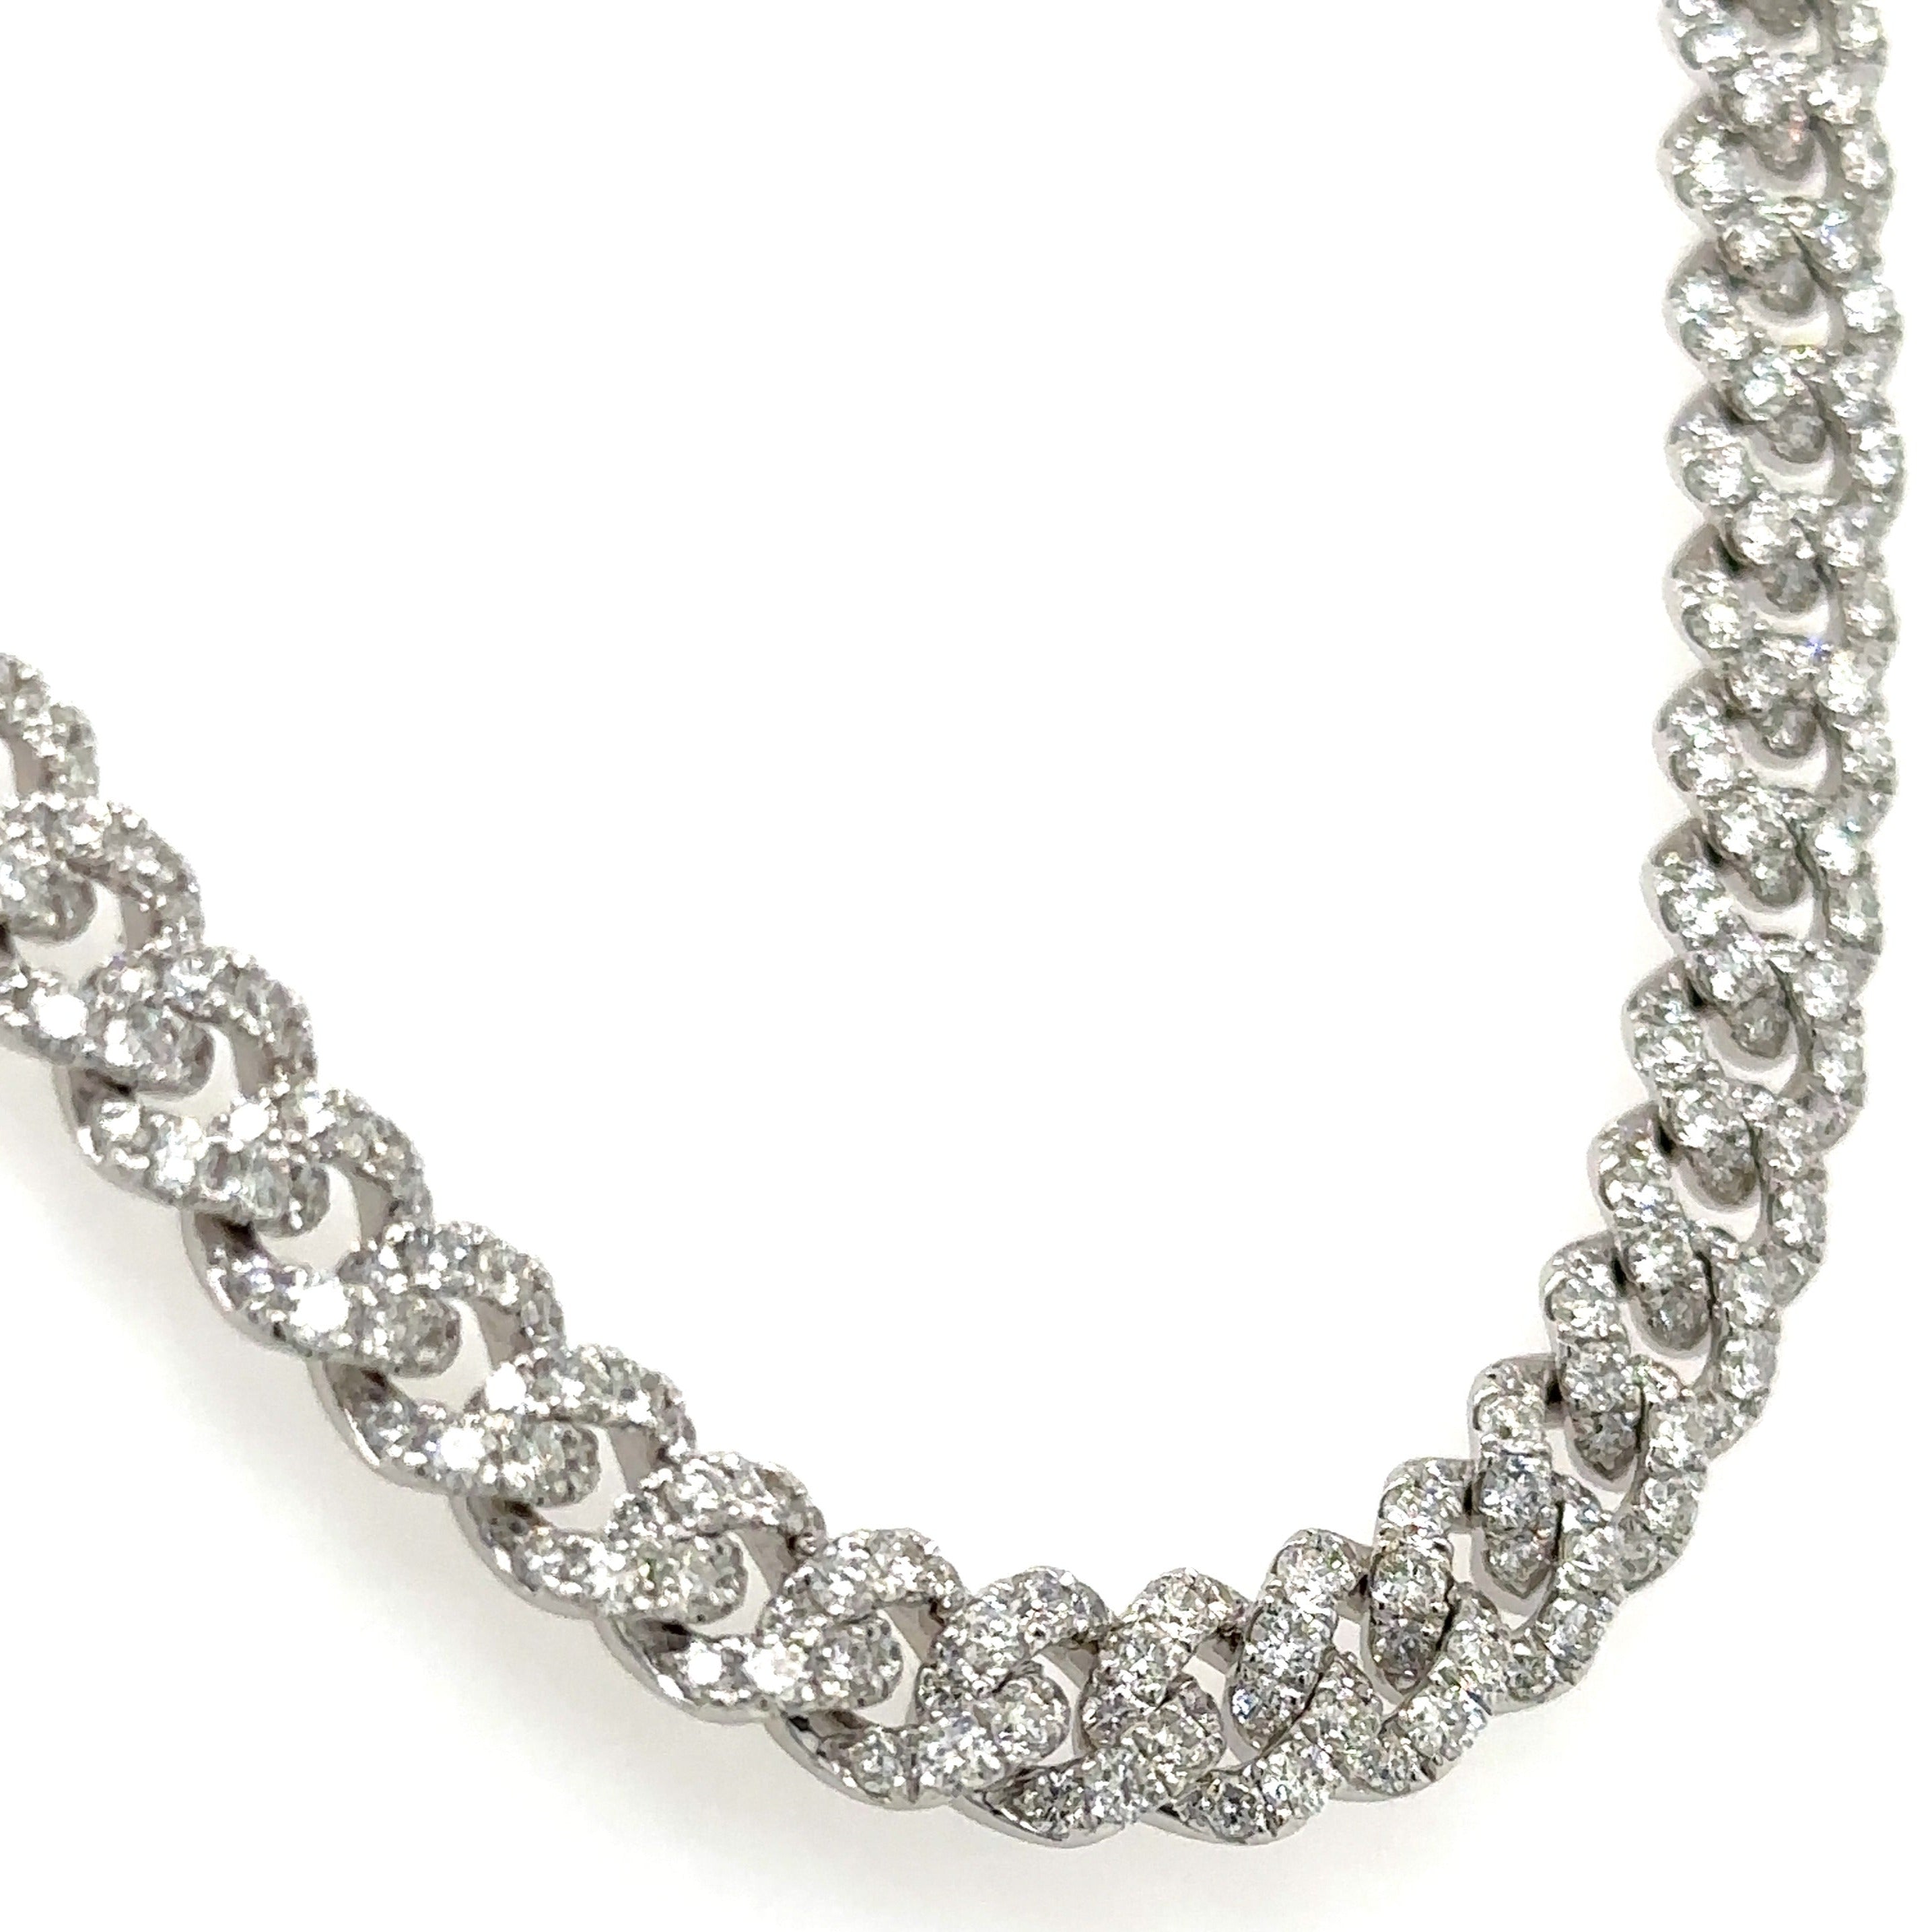 12.11carat Pave Diamond Chain Cuban Link Necklace